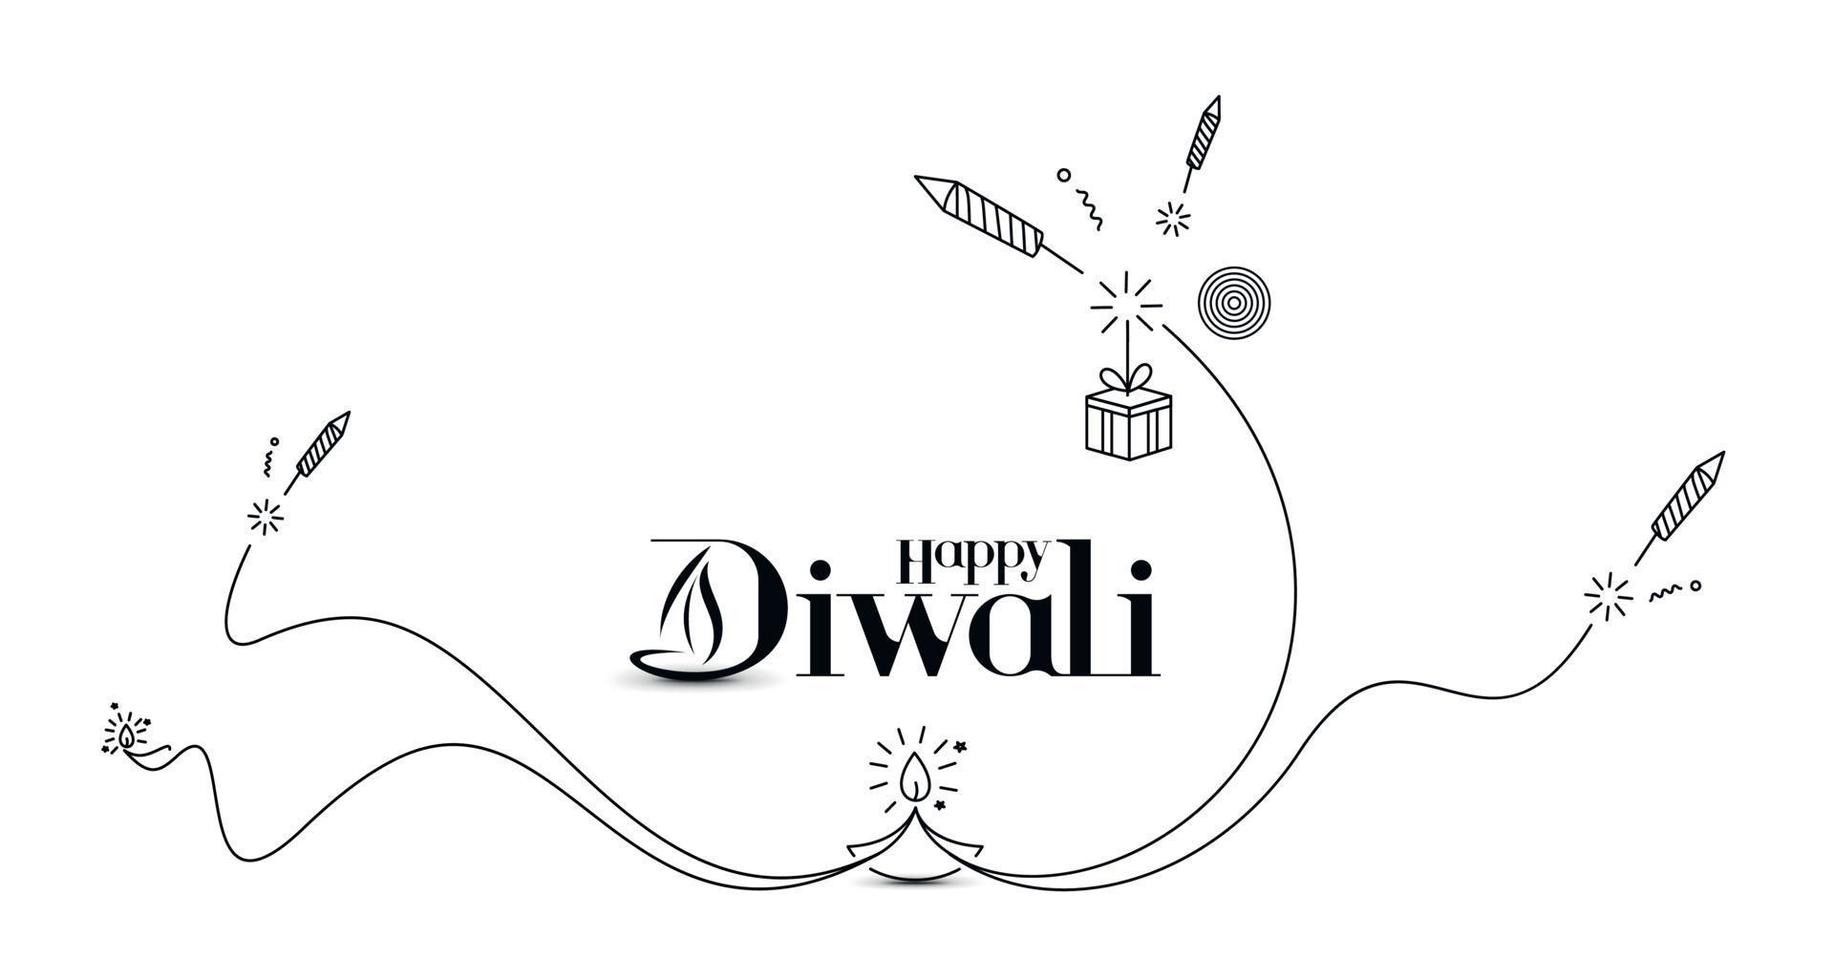 Happy Diwali Background, Vector illustration.